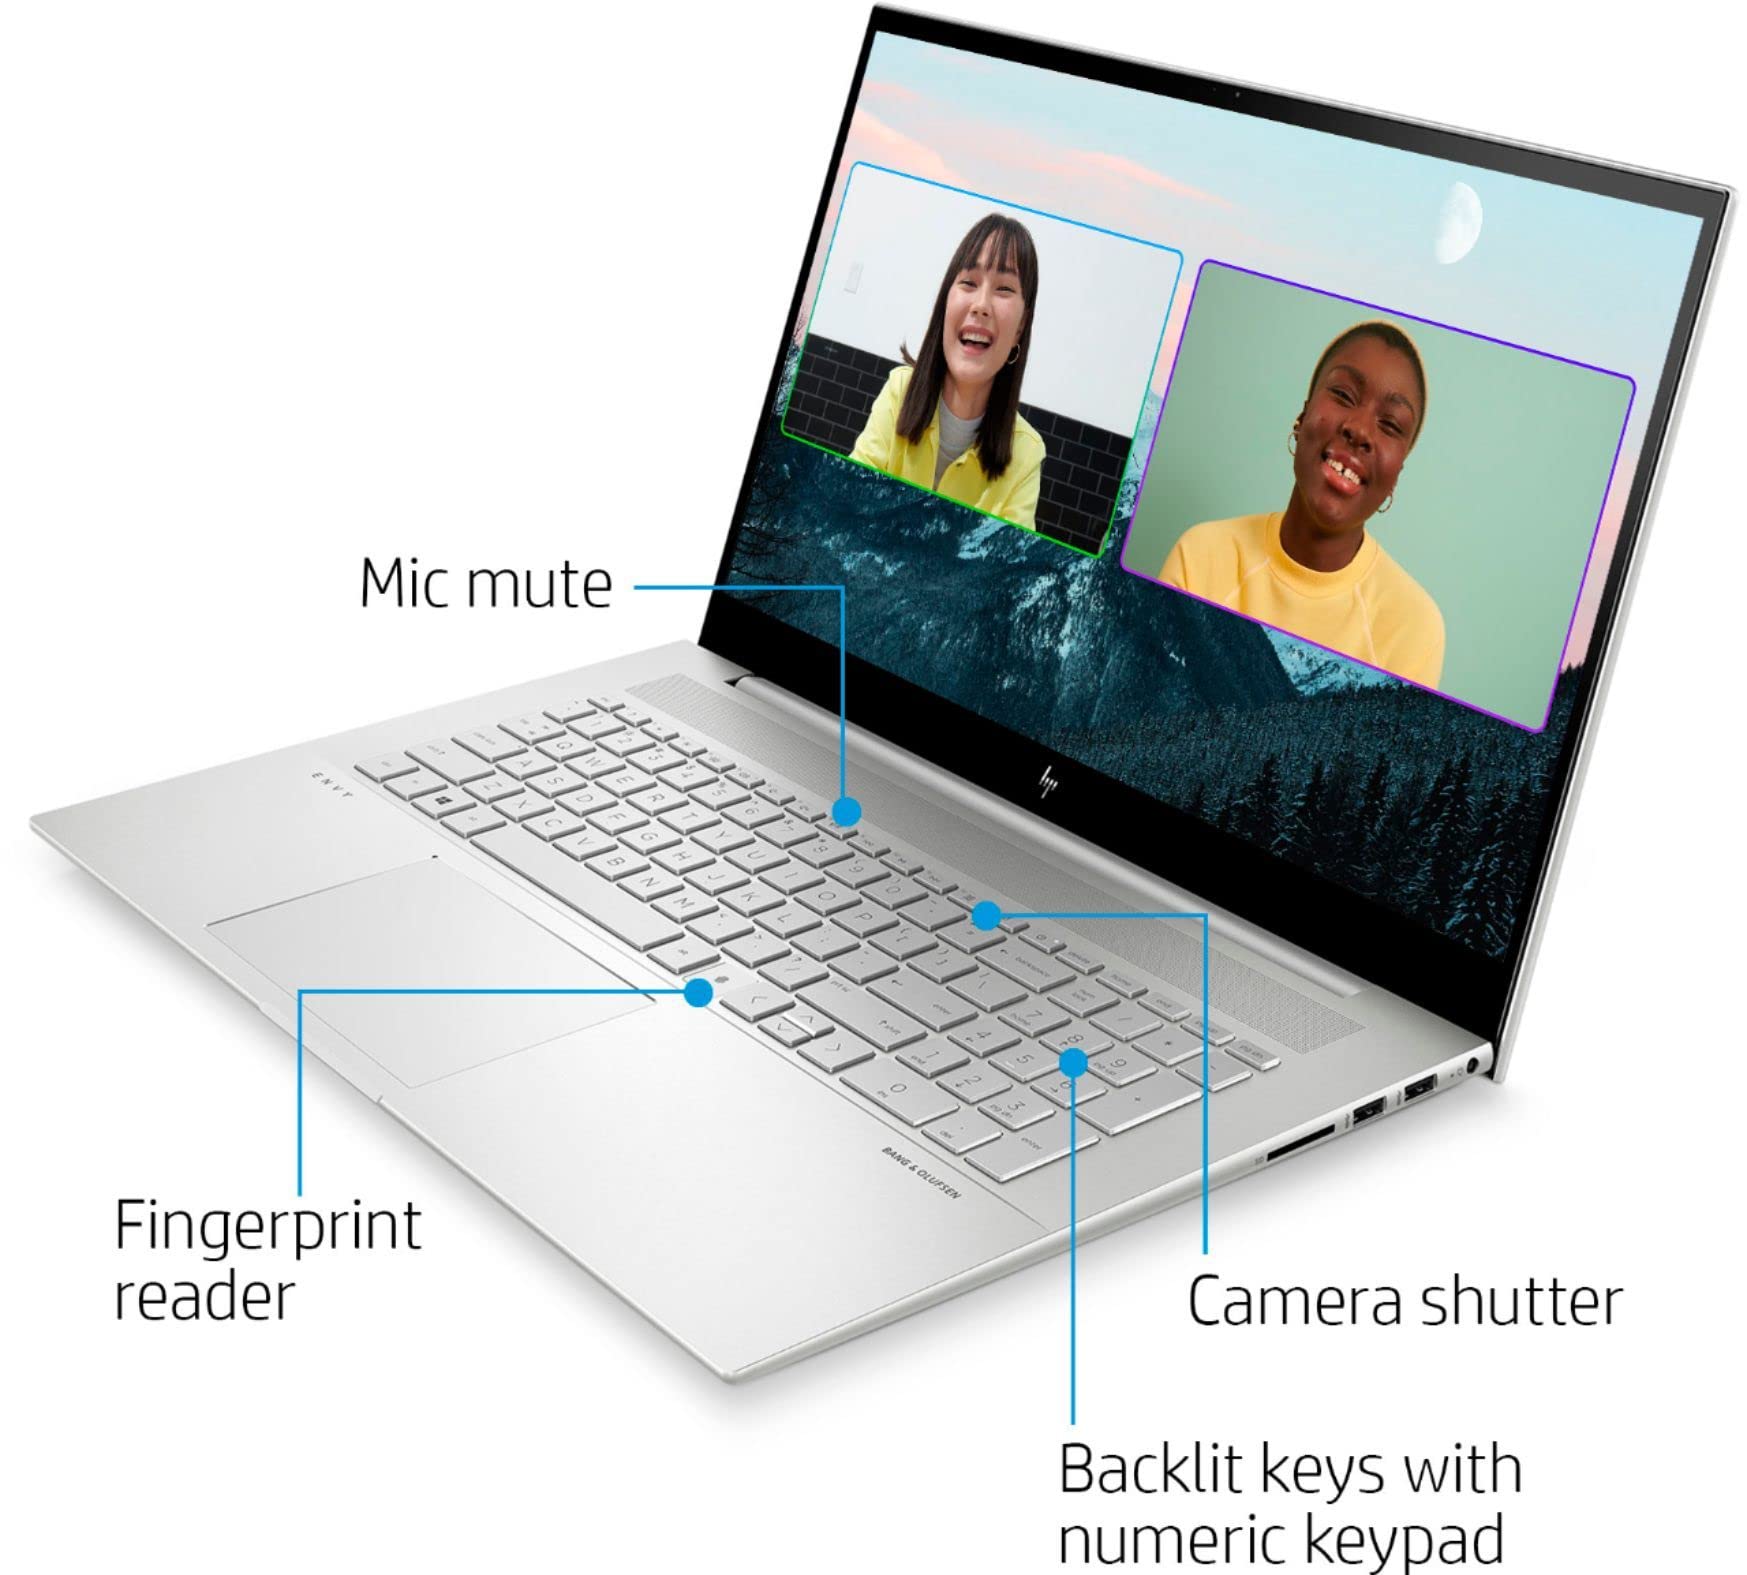 Latest HP Envy Laptop | 17.3